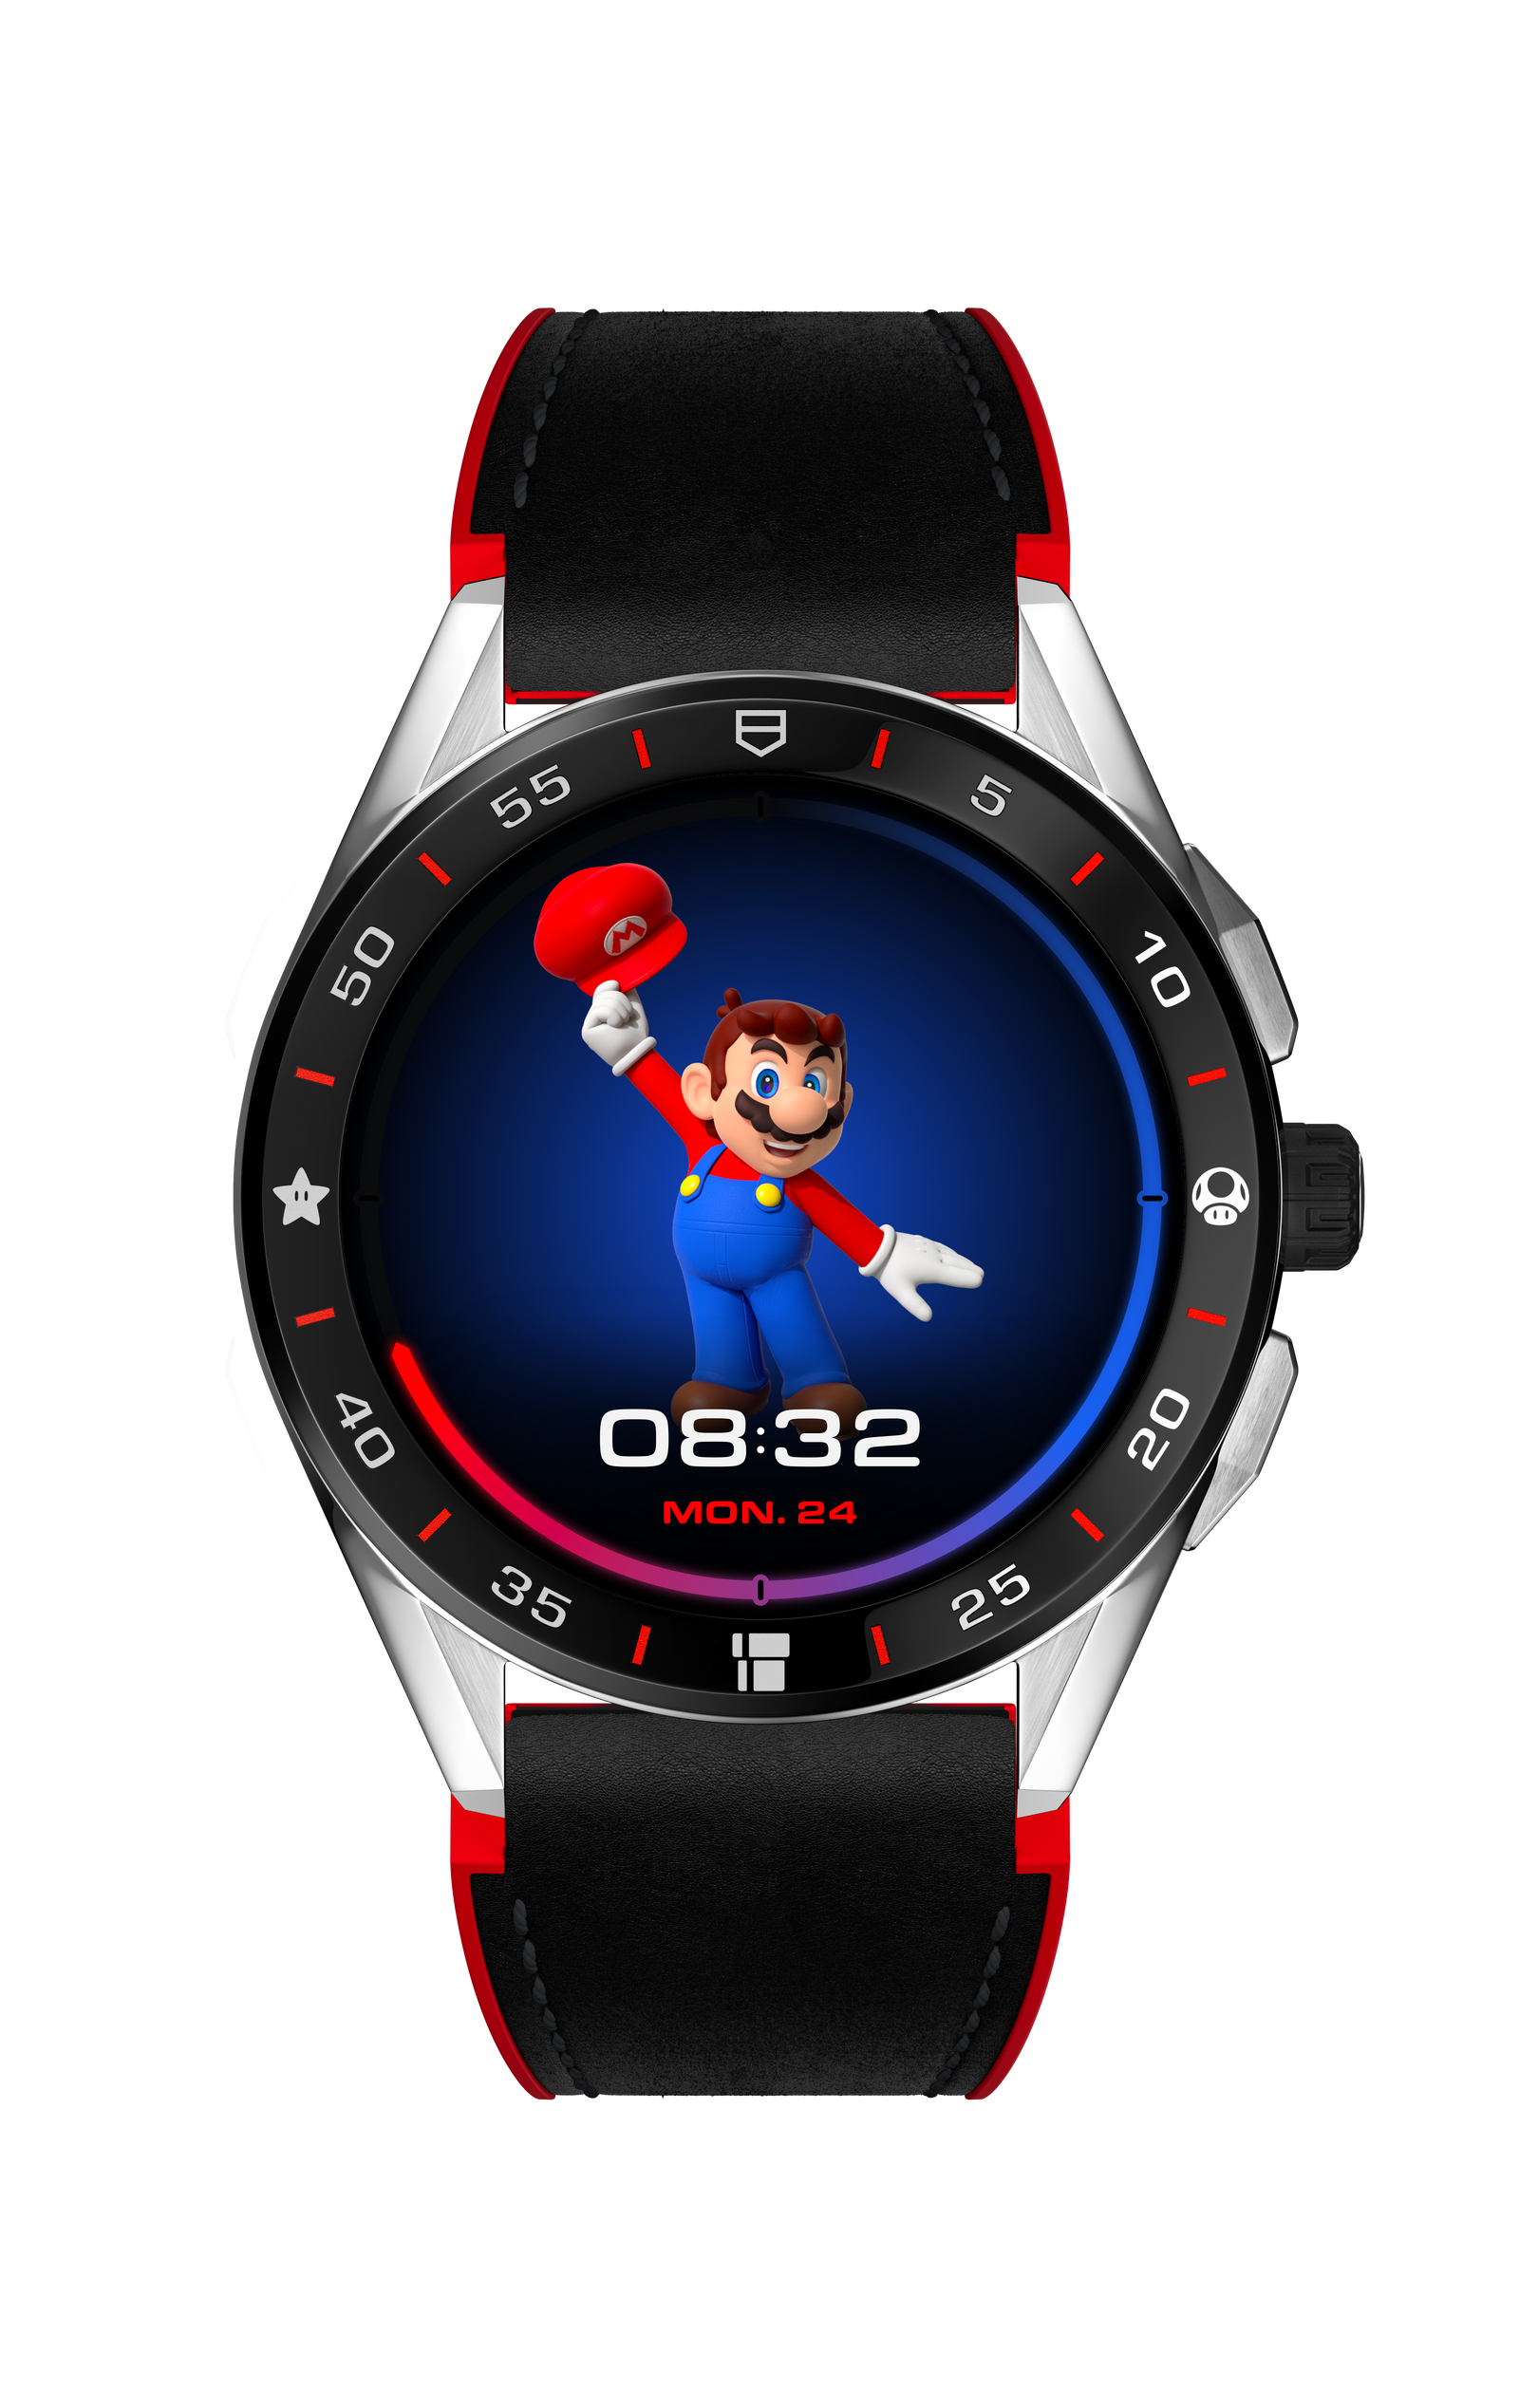 Аксессуар дня часы TAG Heuer изображением Super Mario